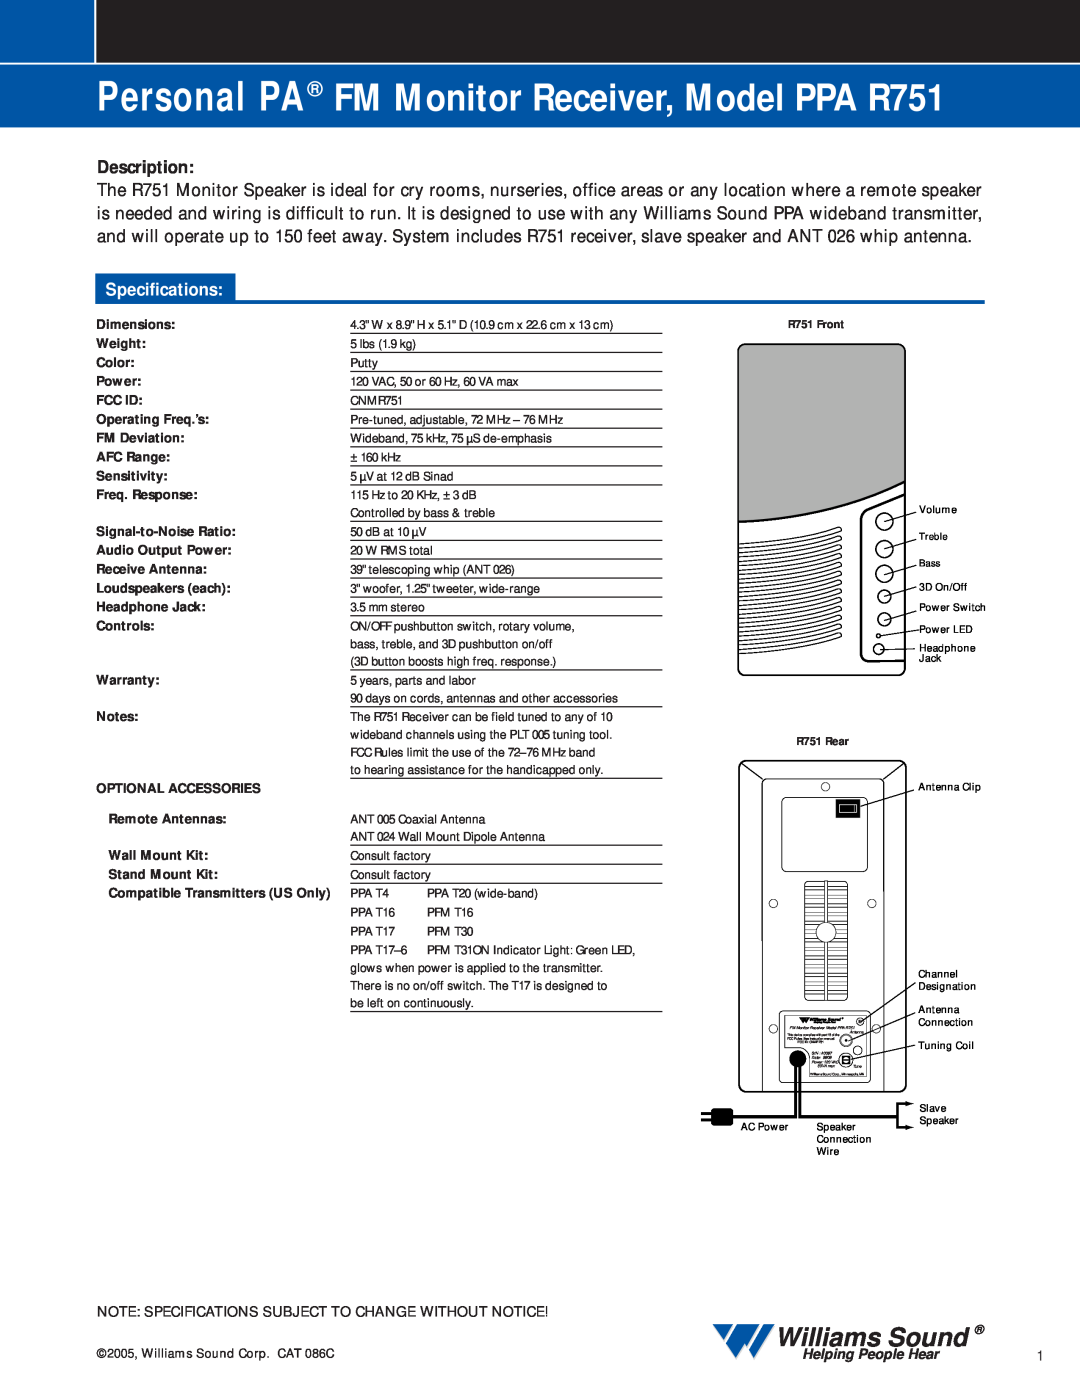 Williams Sound specifications Personal PA FM Monitor Receiver, Model PPA R751, Williams Sound, Description 